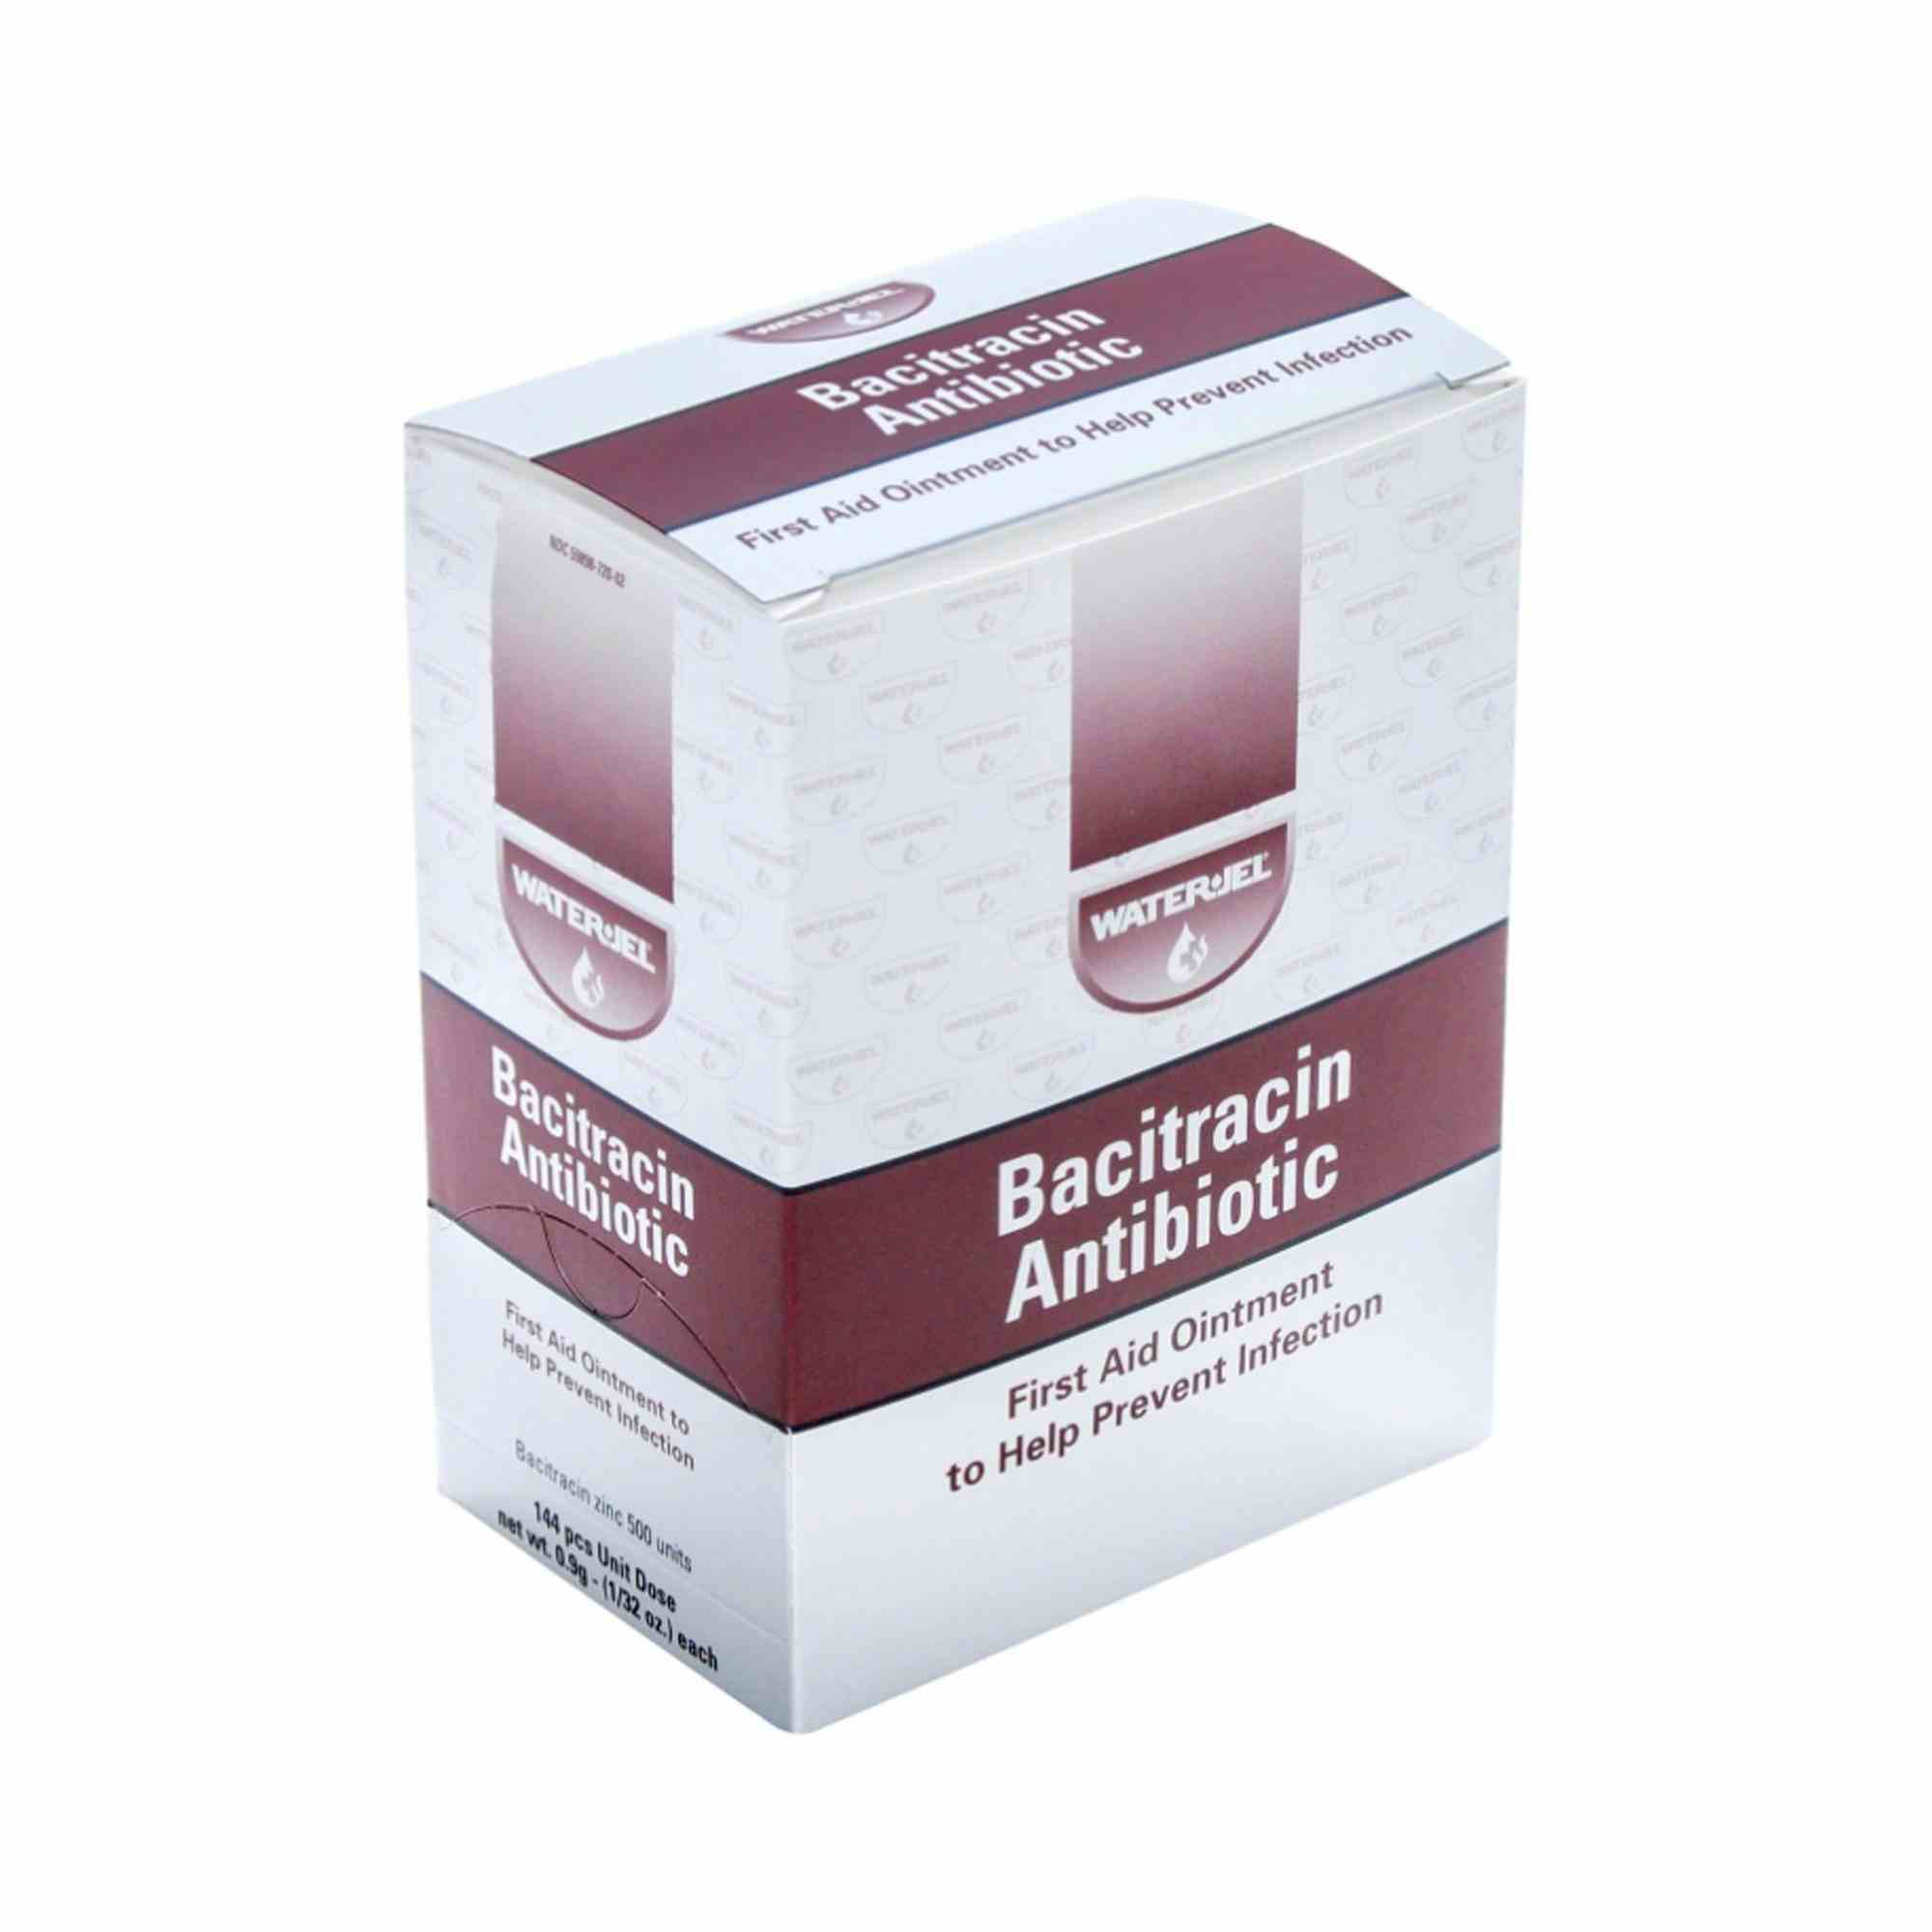 Water Jel Bacitracin Antibiotic Ointment, WJBA1728, Box of 144